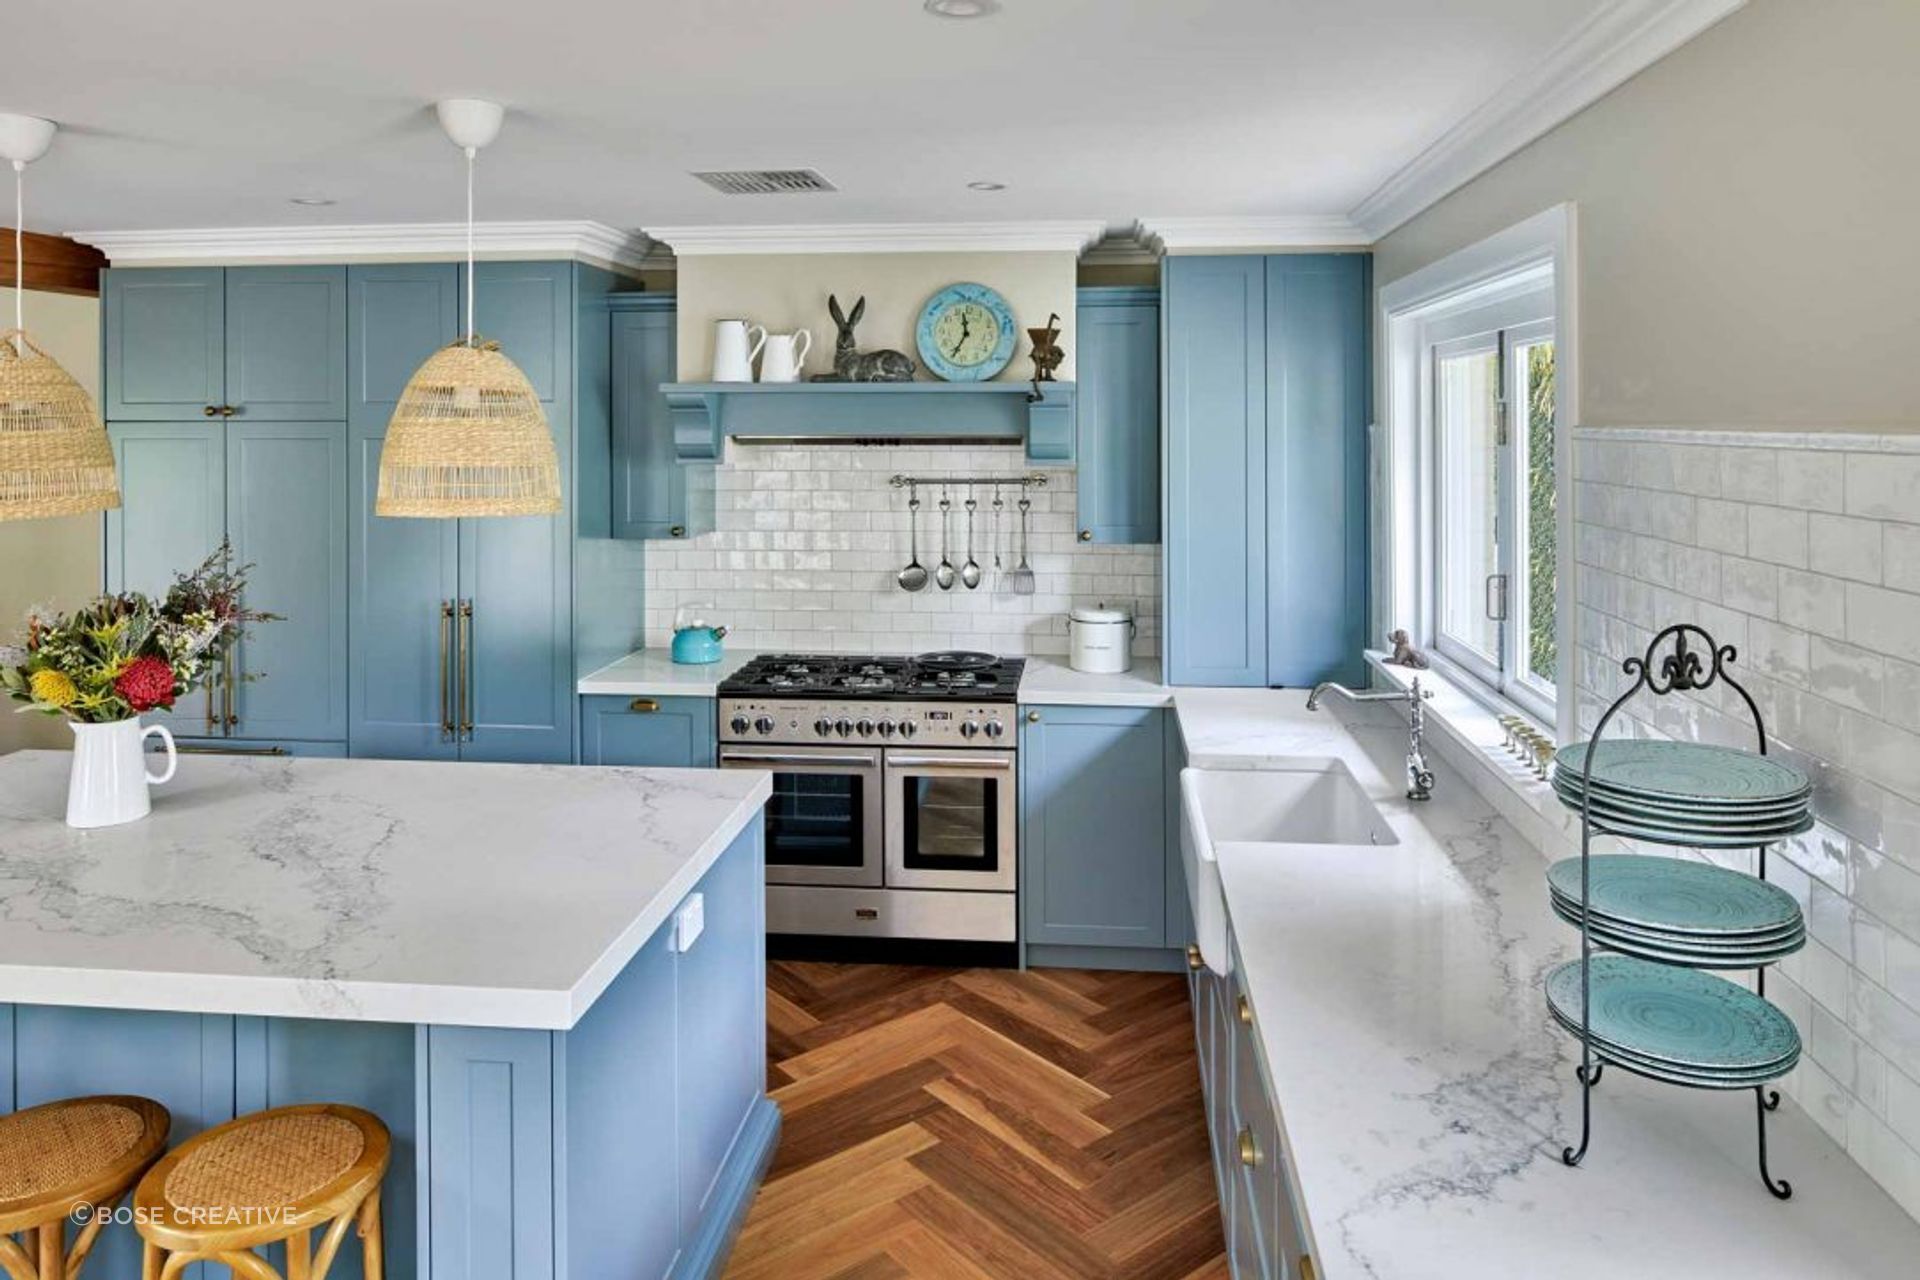 classic-luxury-kitchen-design-gitani-statuario-light-blue-traditional-shaker-cabinets-premier-kitchens-05-1084x723.jpg